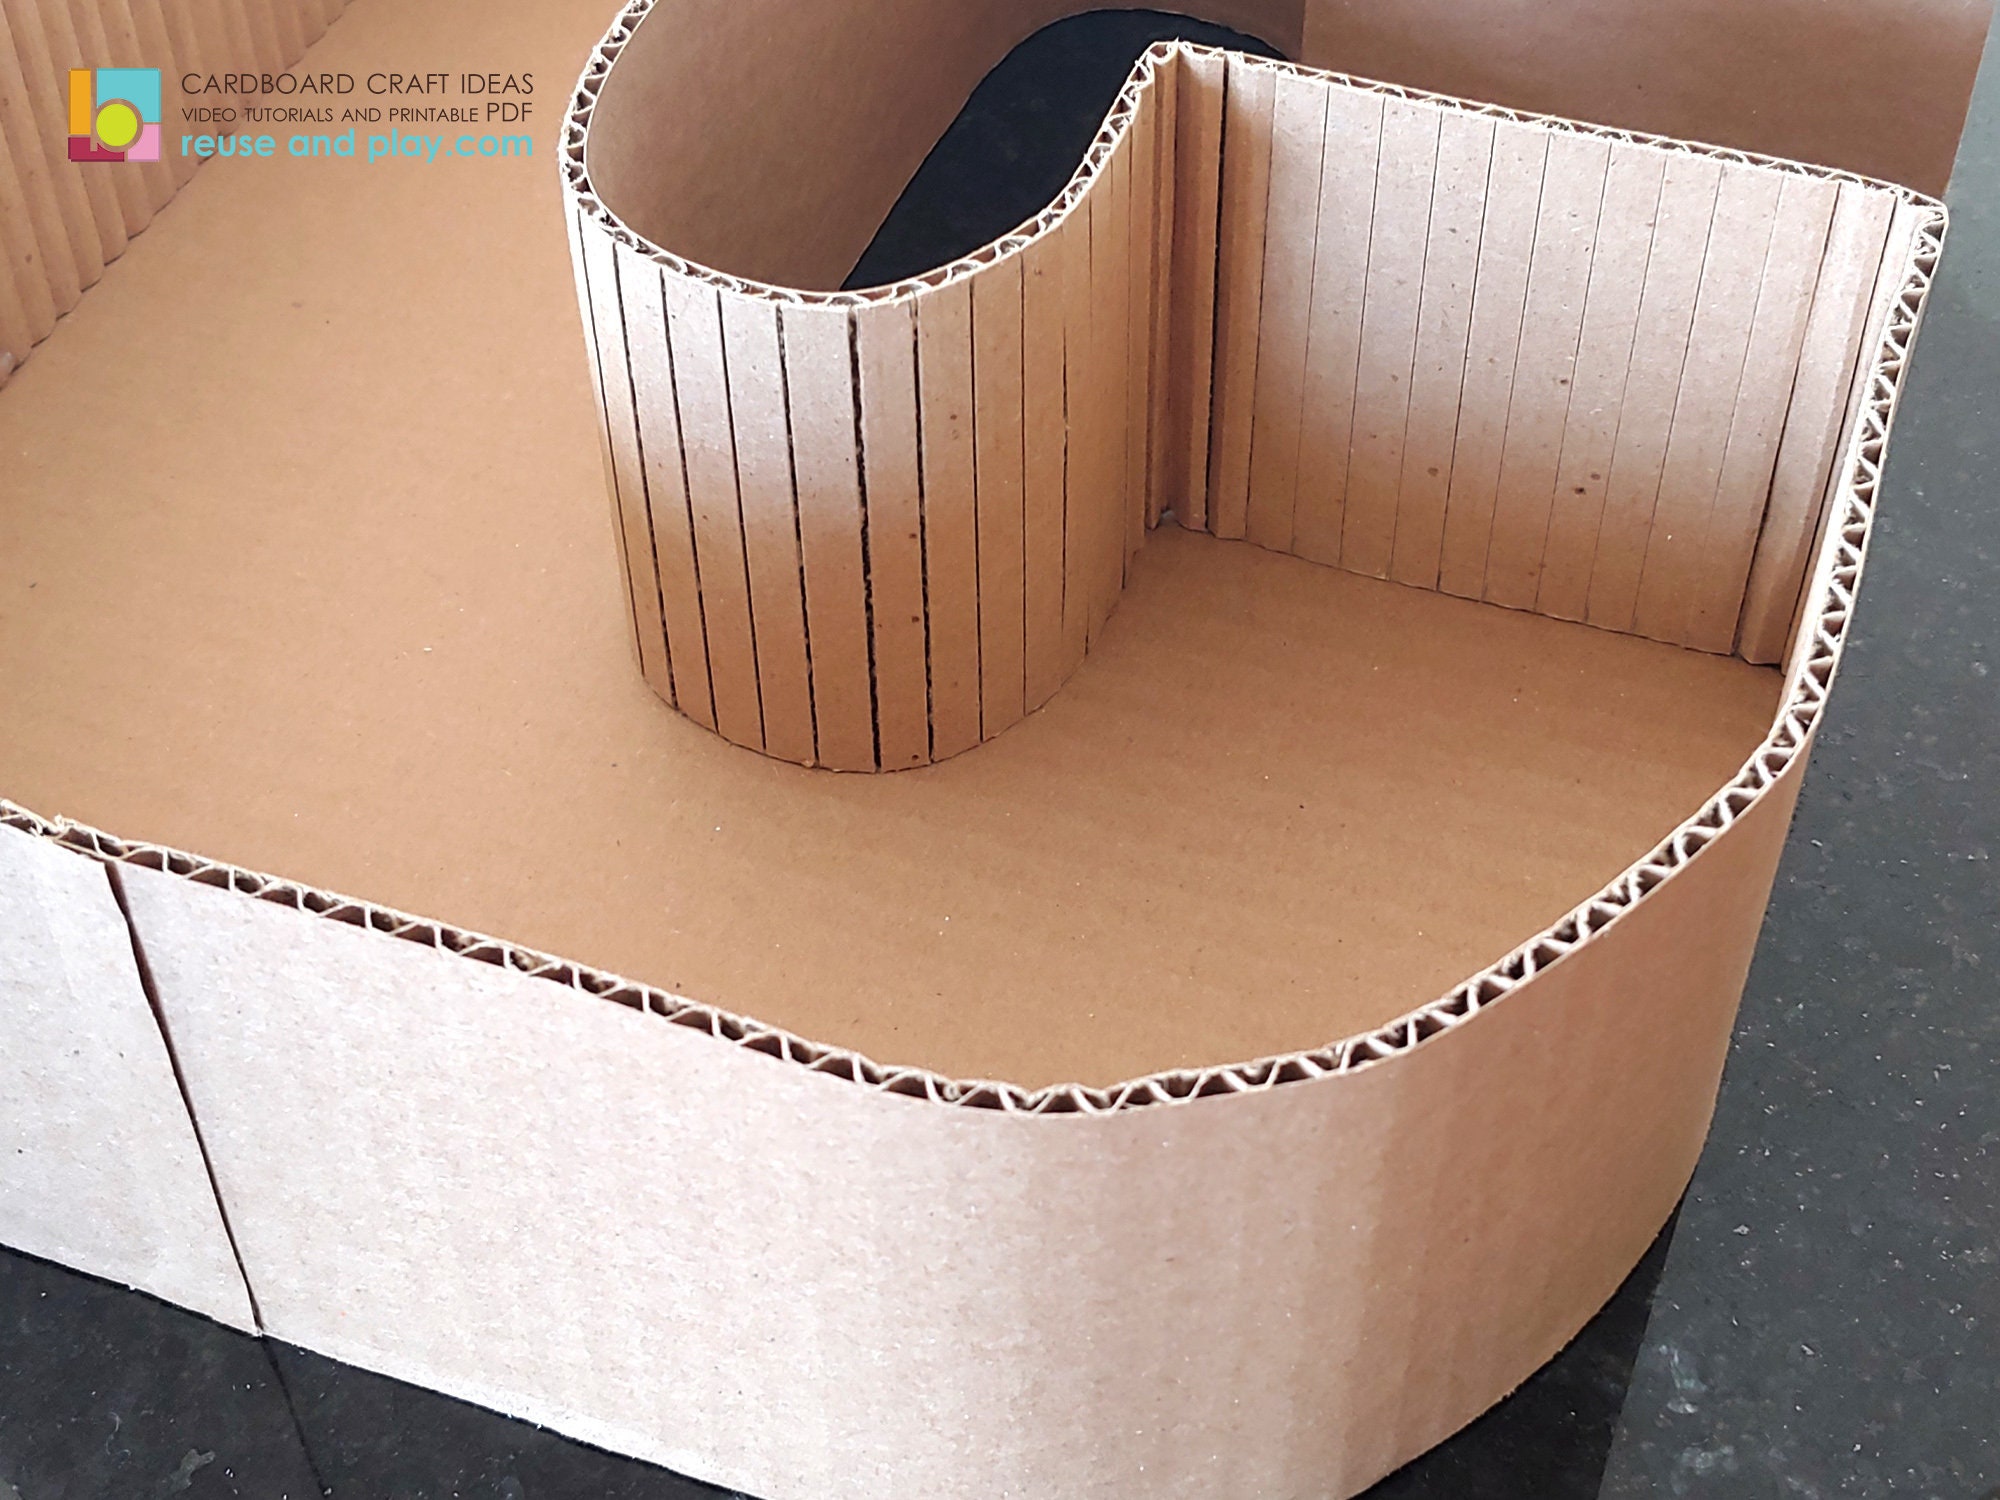 Turn Cardboard Into a Gigantic Birthday Number - DIY Craft Tutorial 